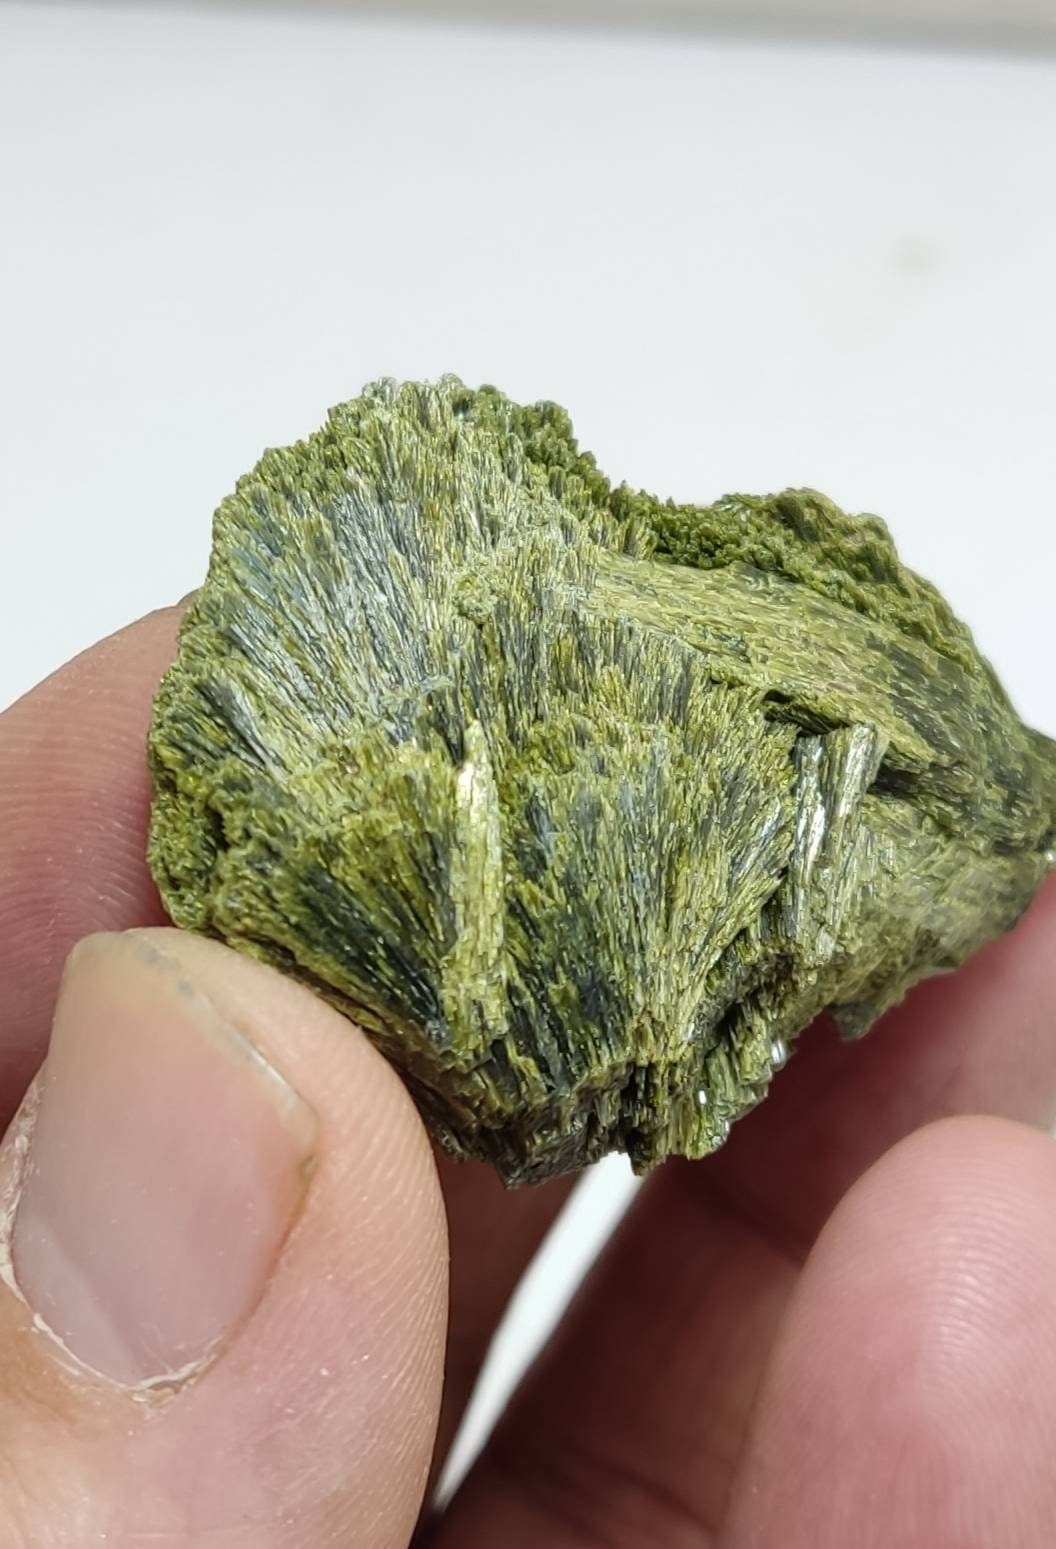 Crystal specimen of Epidote 33 grams